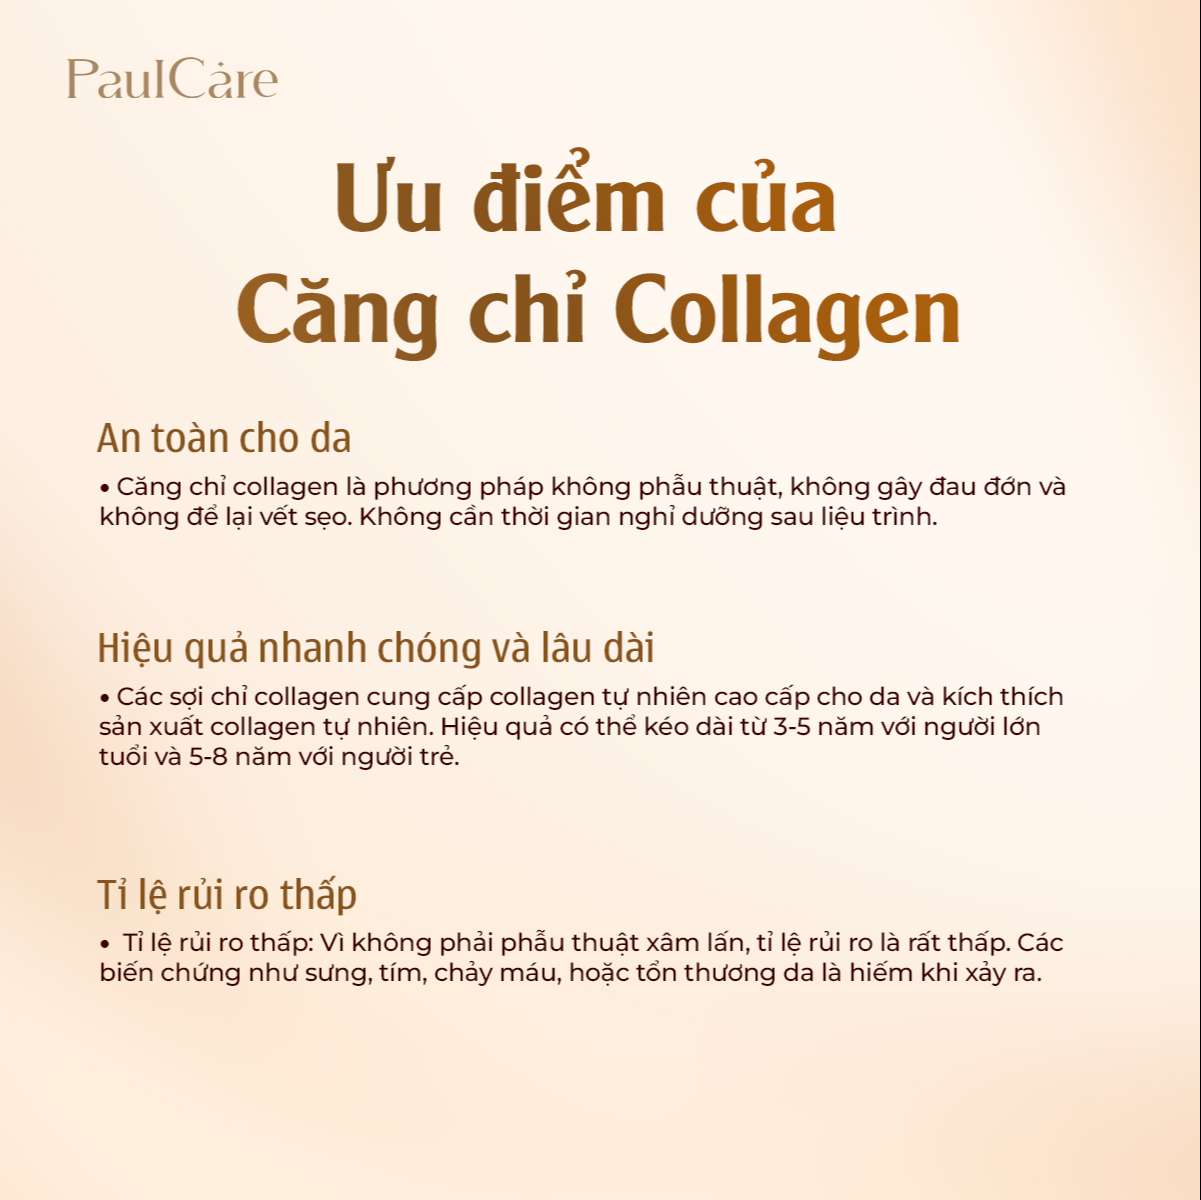 uu_diem_cua_cang_chi_collagen_paulcare